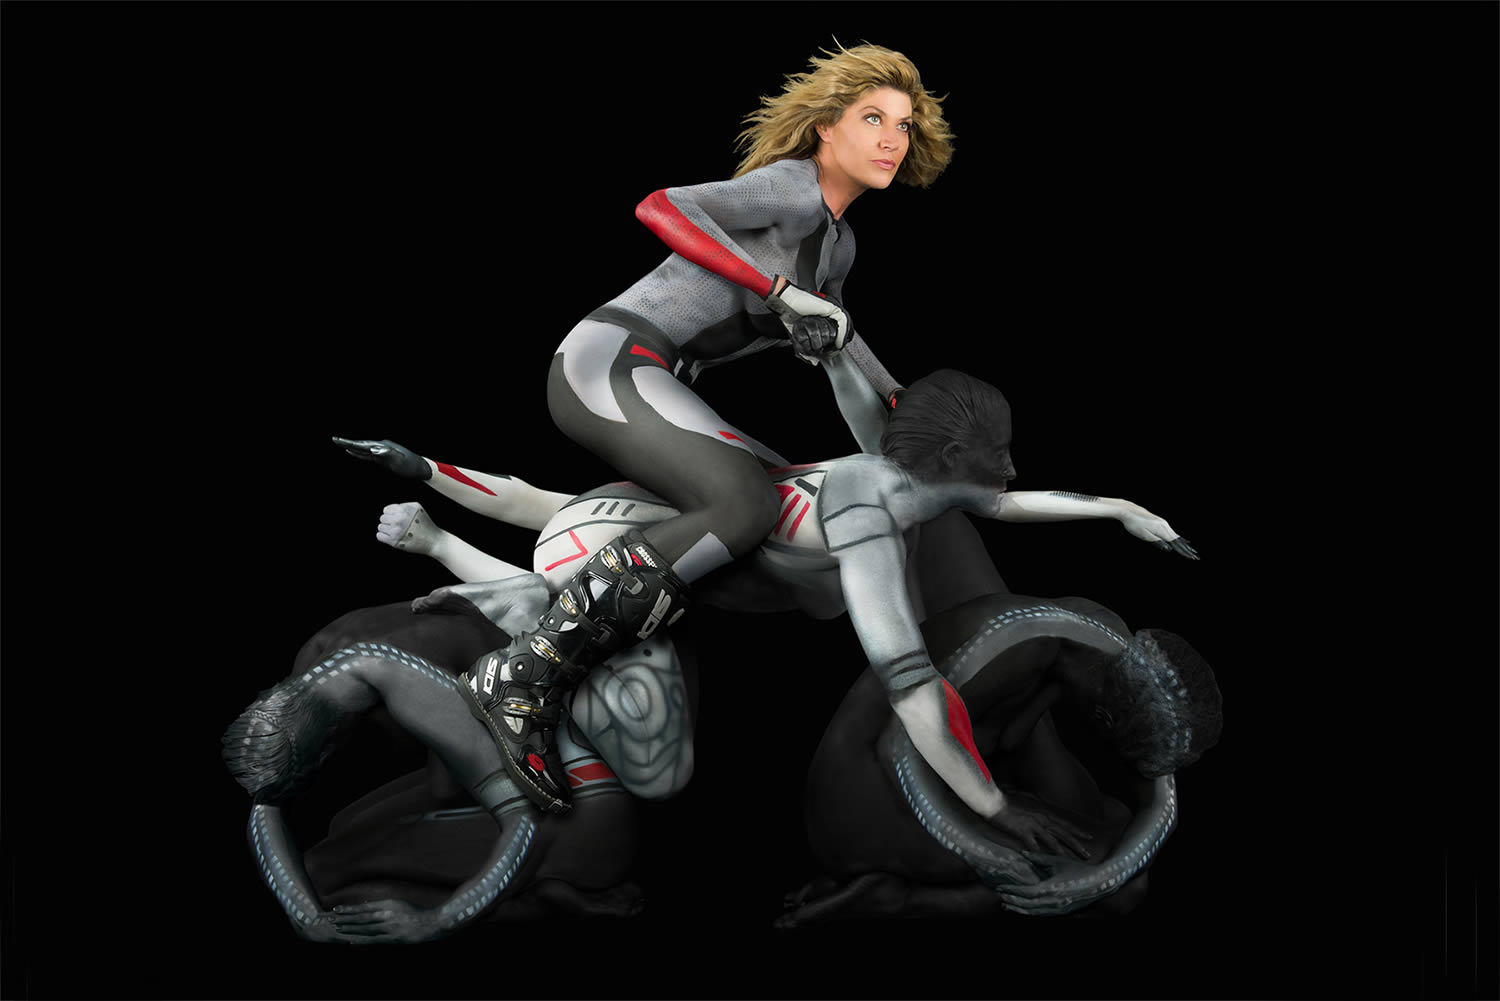 trina merry body art human motorcycle